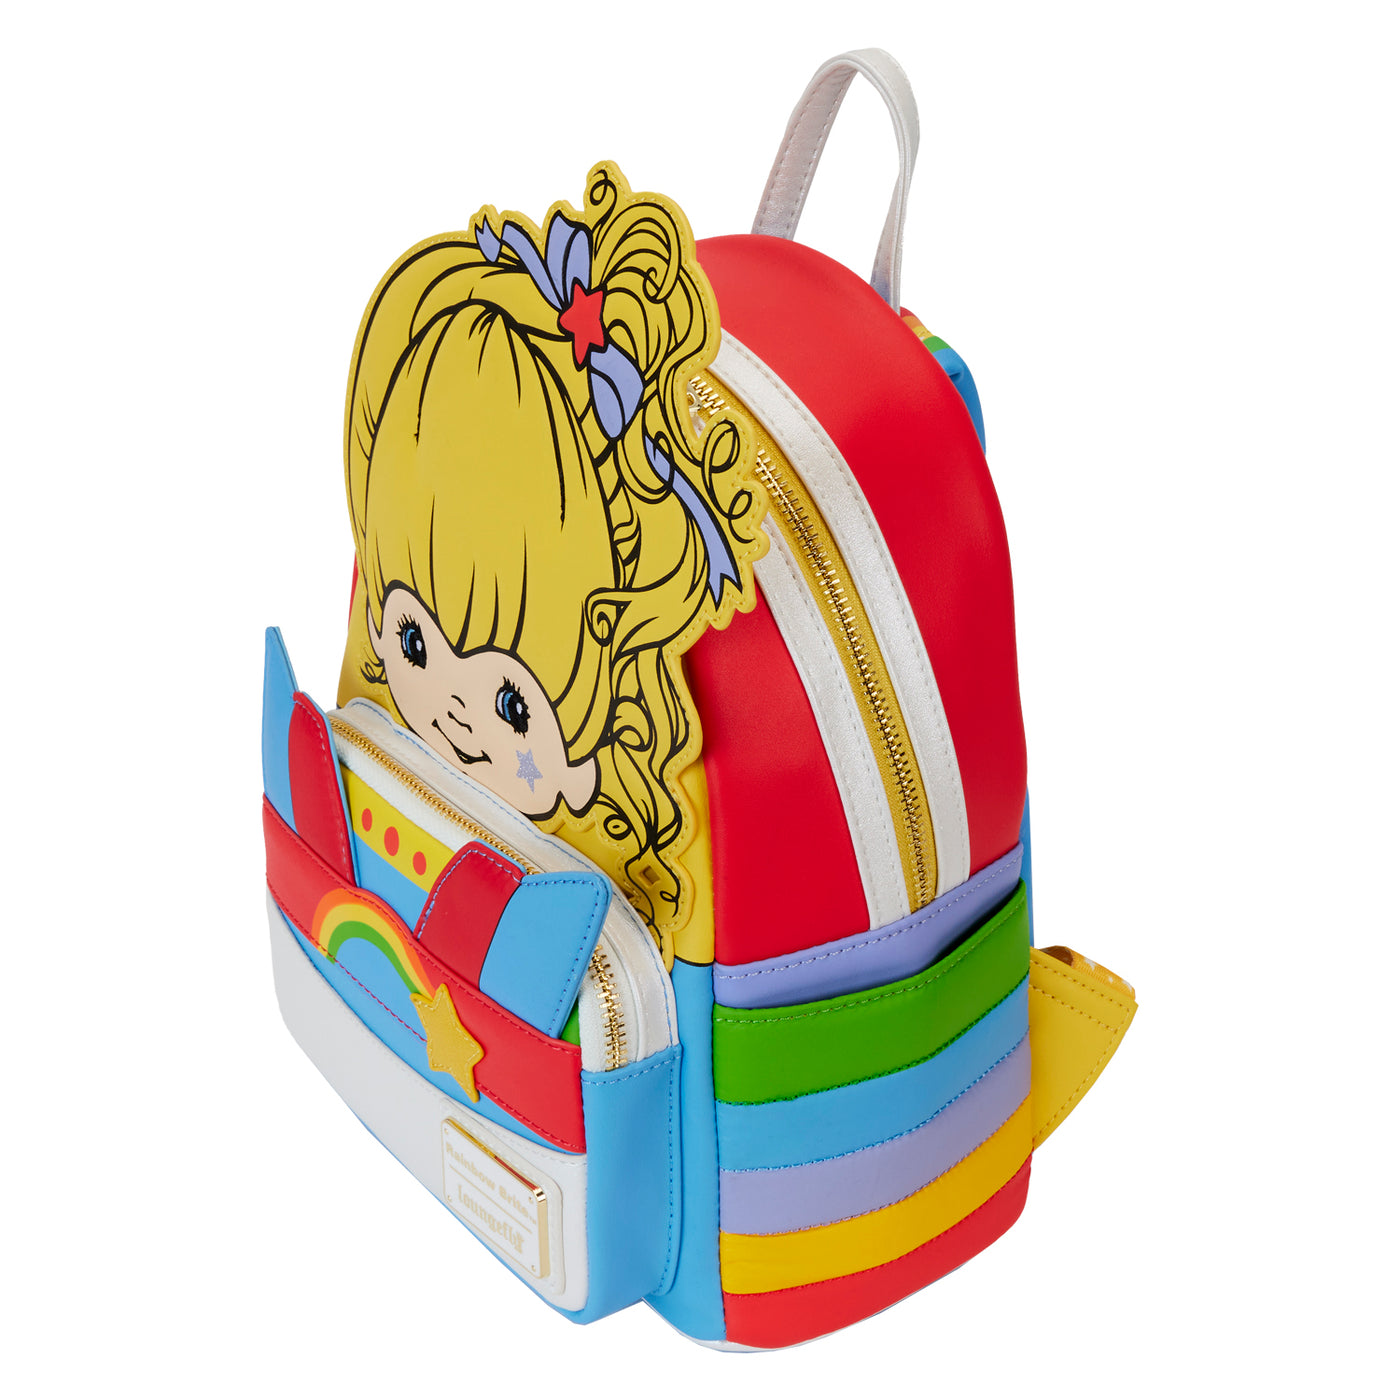 Hallmark Rainbow Brite Cosplay Mini Backpack